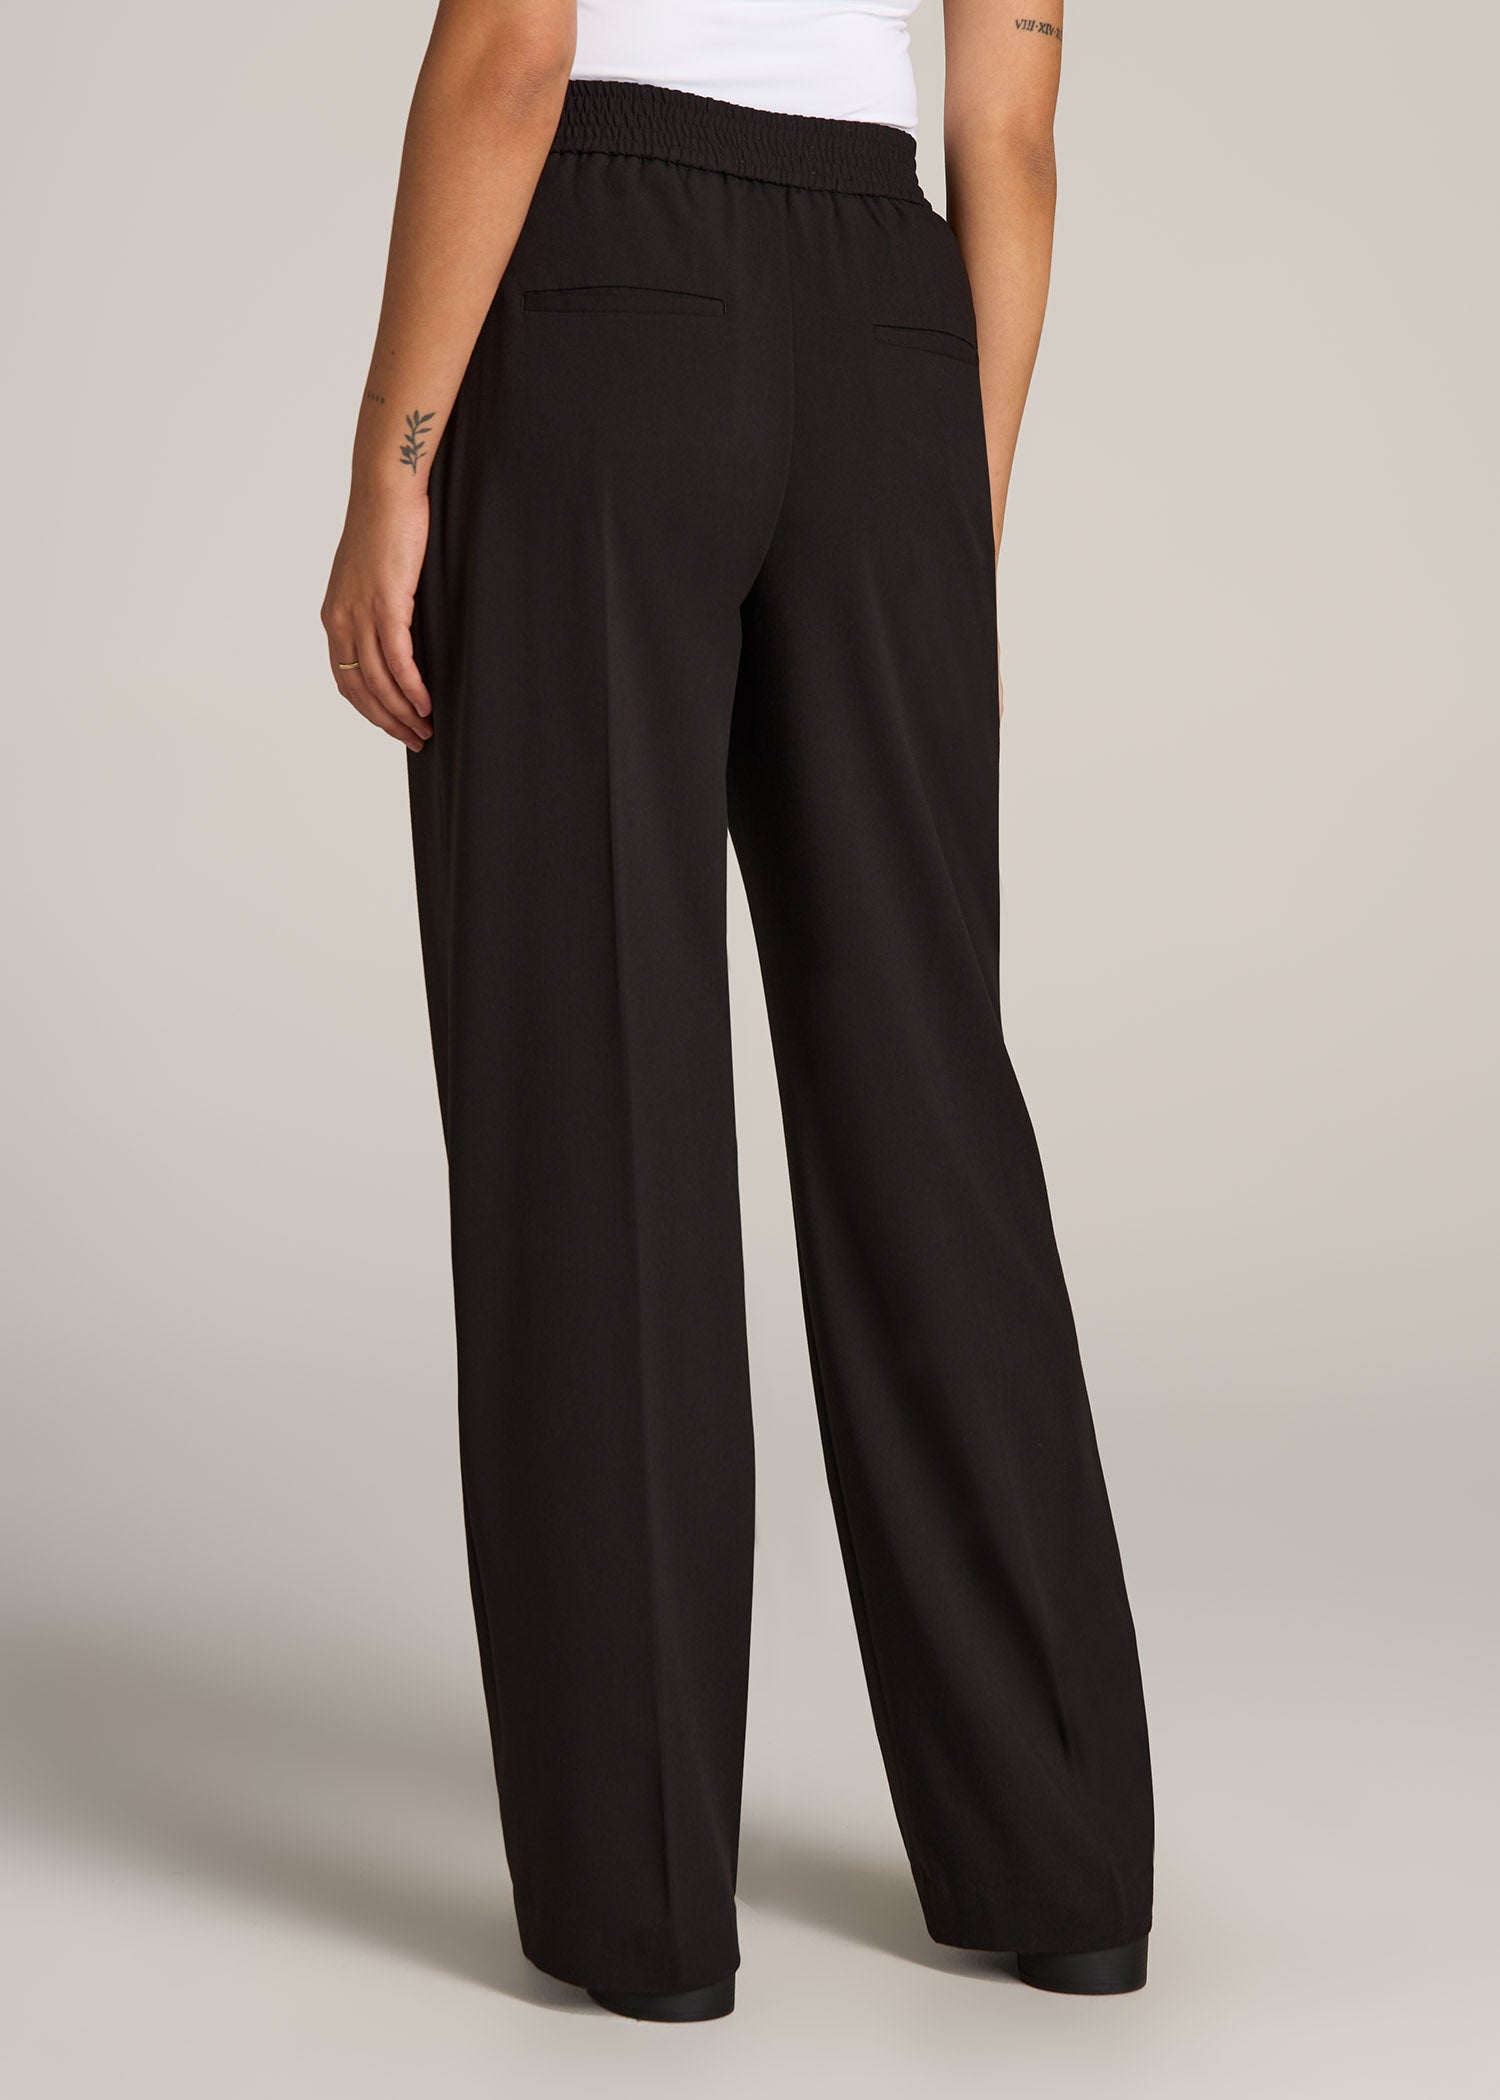 5 Pockets,Extra Tall Womens Straight Leg Yoga Pants Stretch Work Dress  Pants Slim Fit,37,Black,Size XL